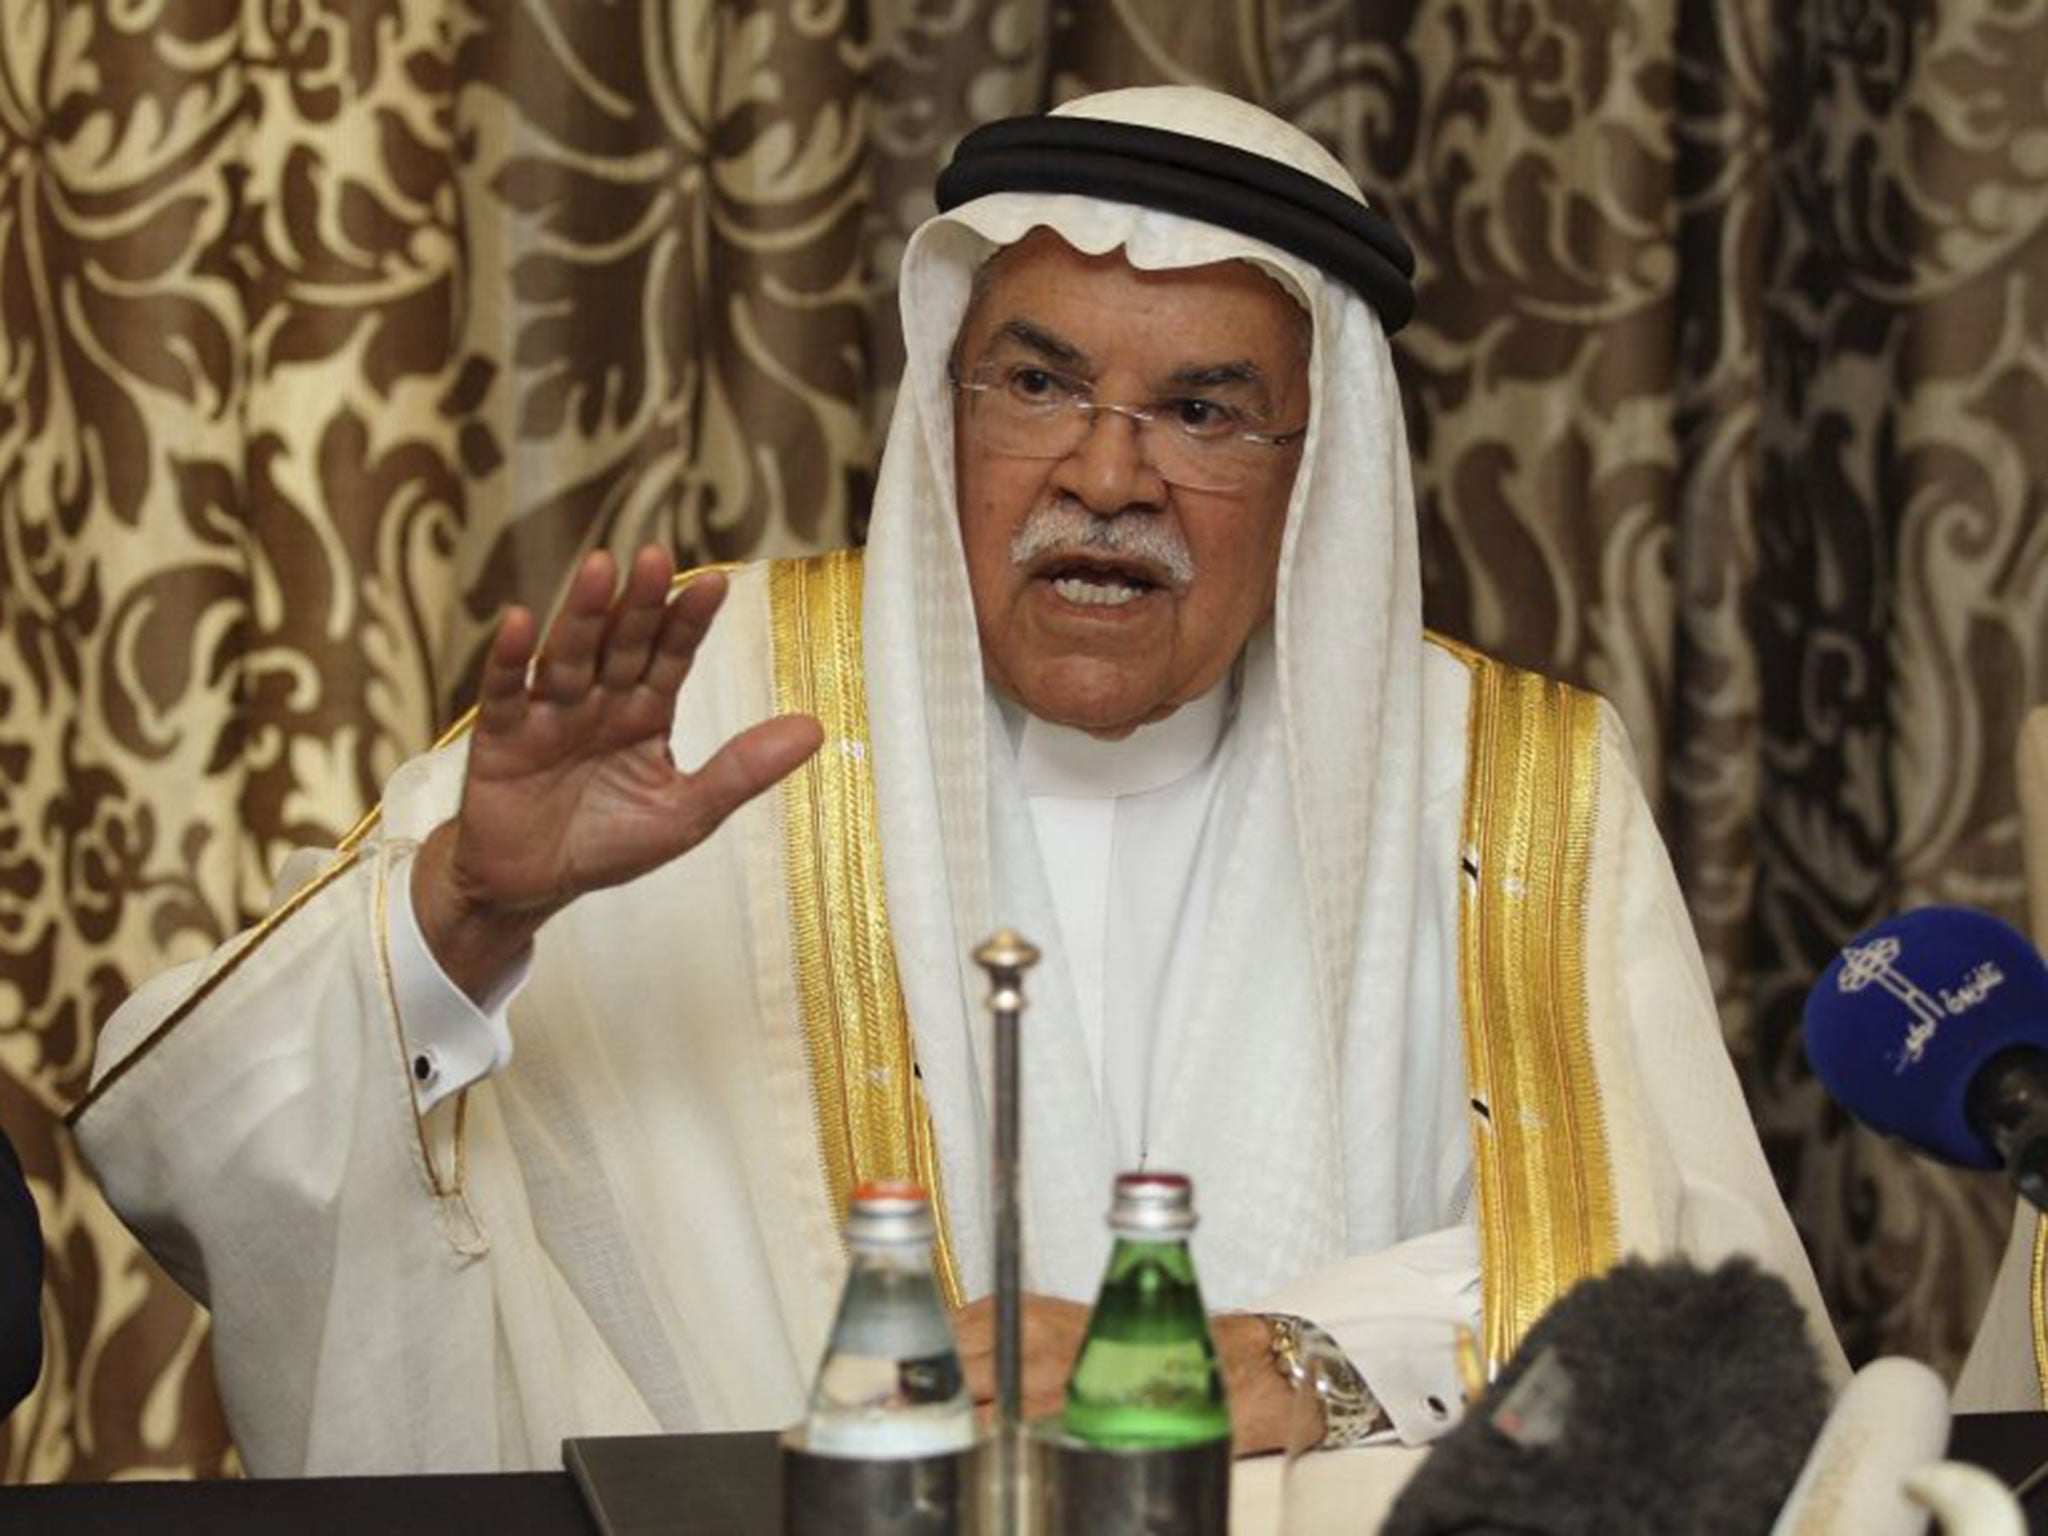 Saudi Arabia’s Oil Minister Ali al-Naimi called on Opec to freeze oil production